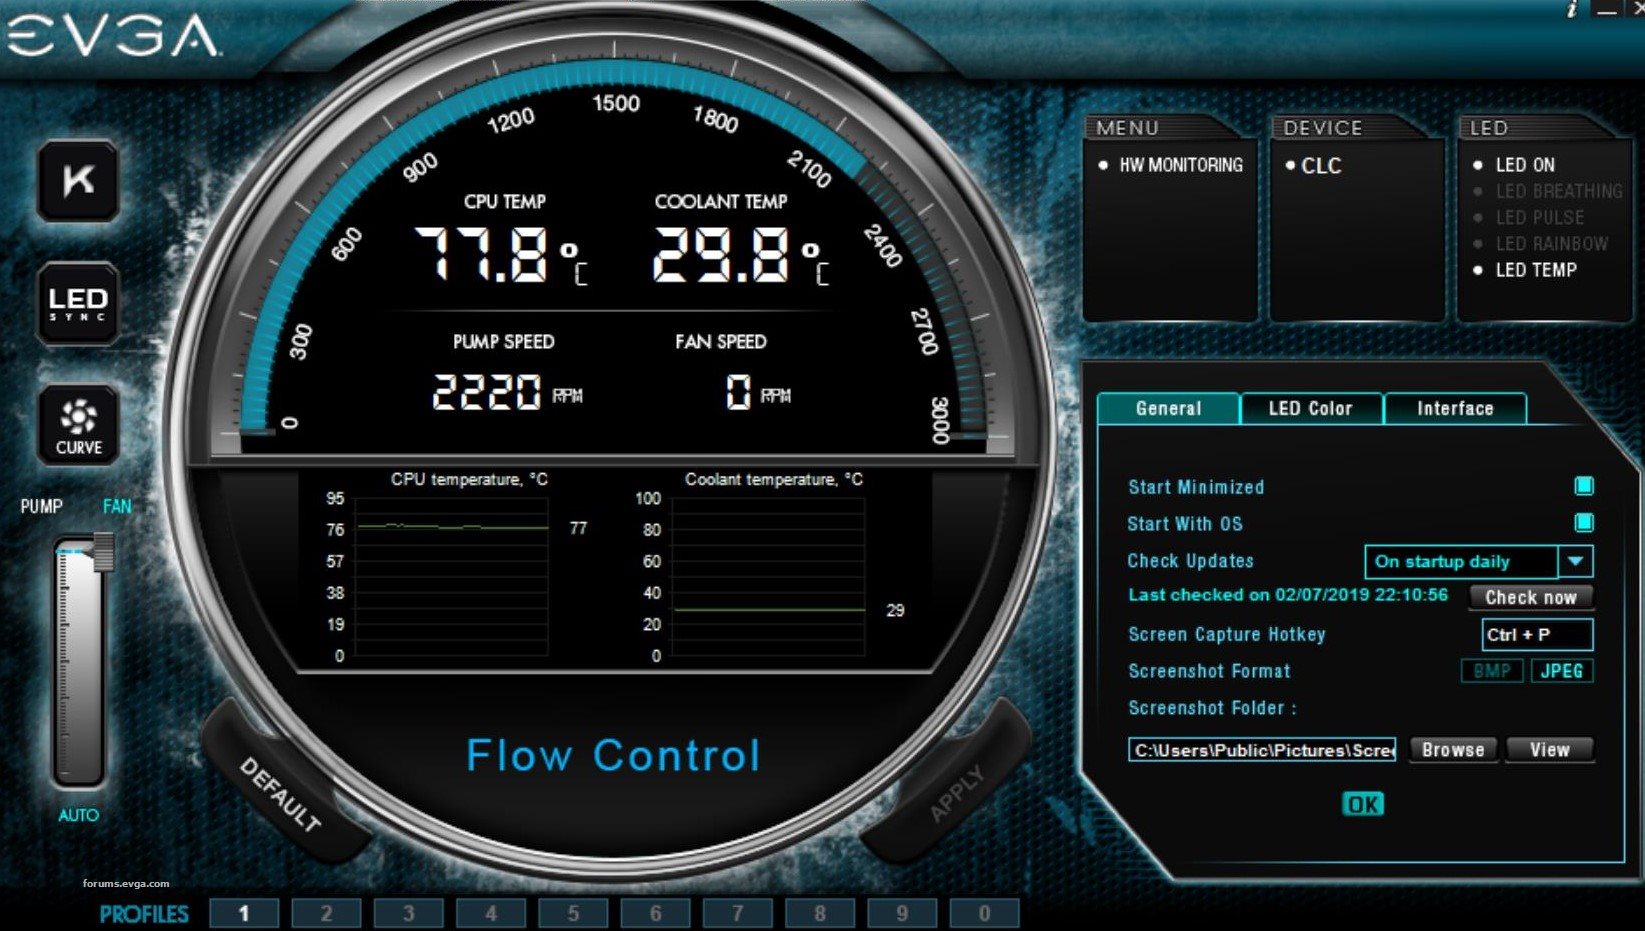 Temp start. EVGA управление вентиляторами. Flow Control. EVGA программа. Control Center 3.0 Fan Speed.